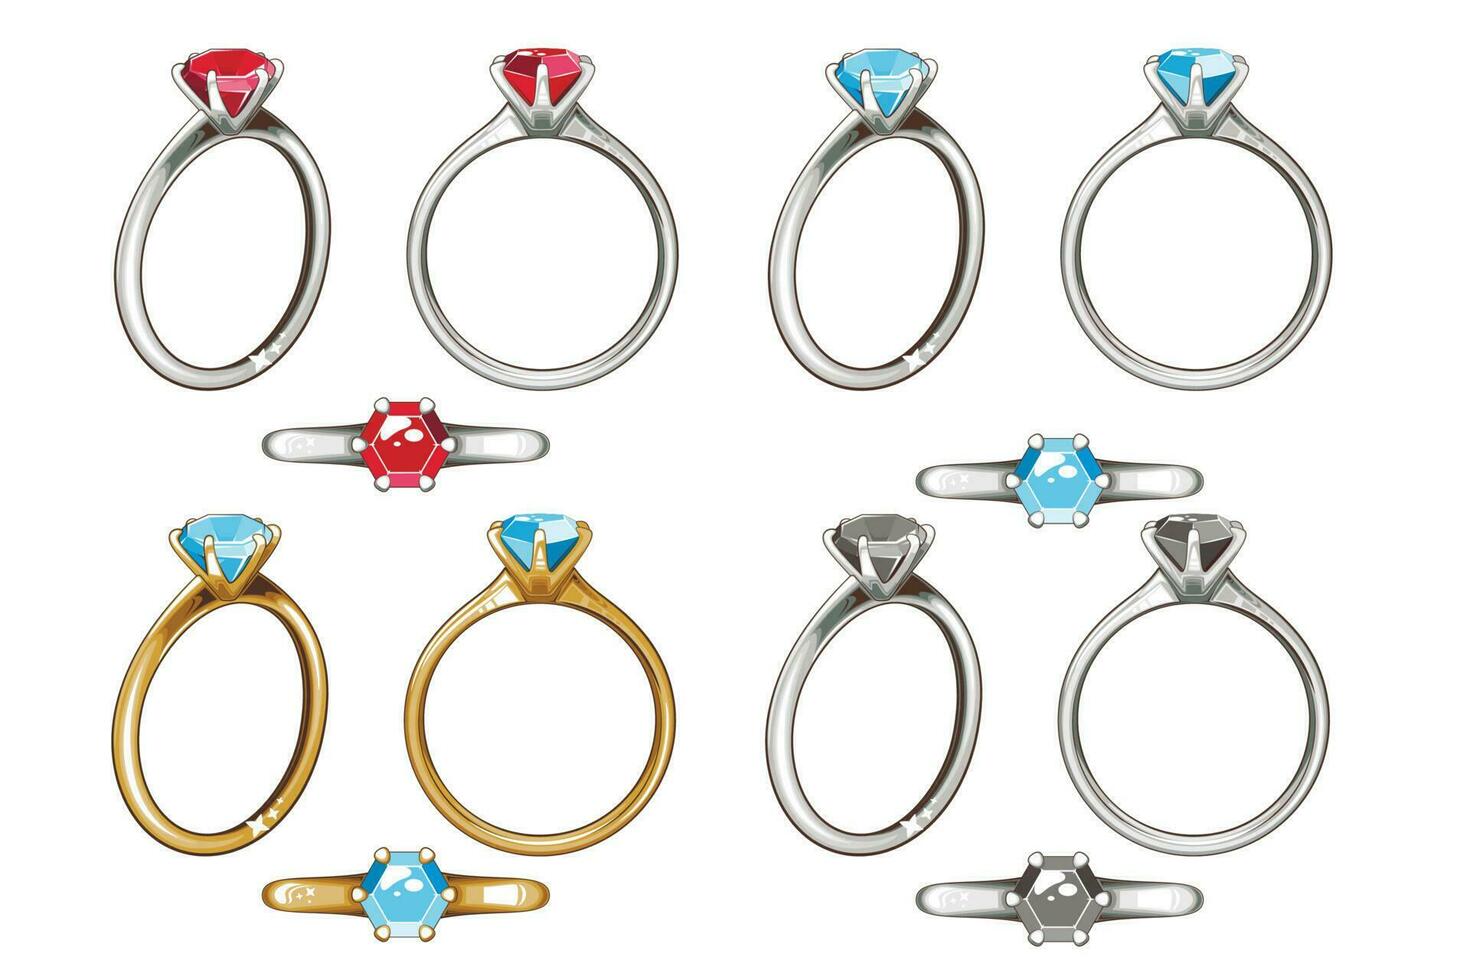 Boda anillo ilustración, oro y plata compromiso anillos recopilación, Boda anillo conjunto vector